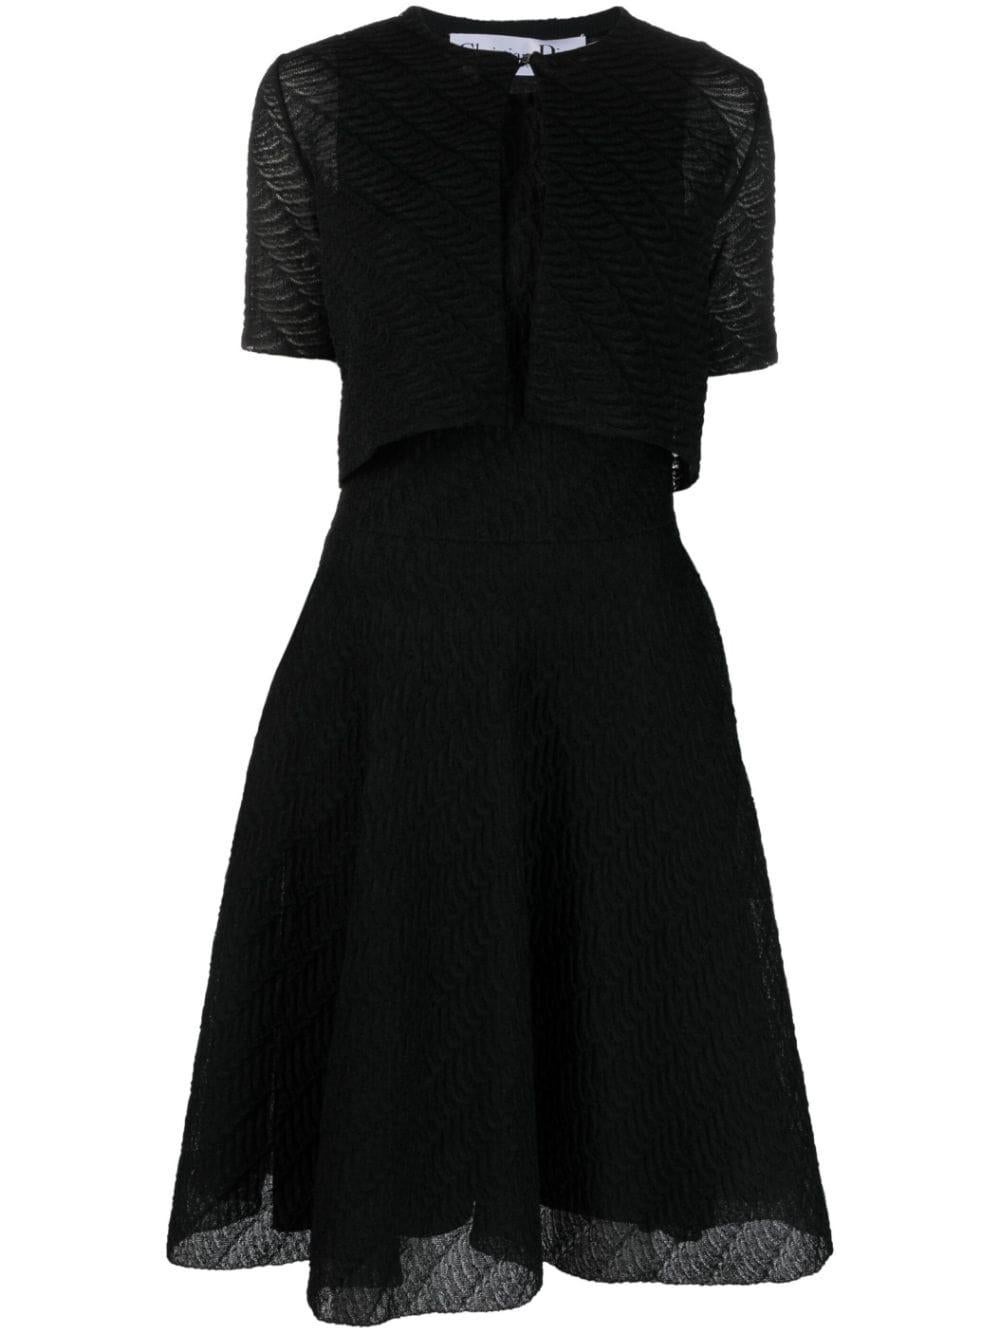 Christian Dior Black Dress and Bolero Set For Sale 6